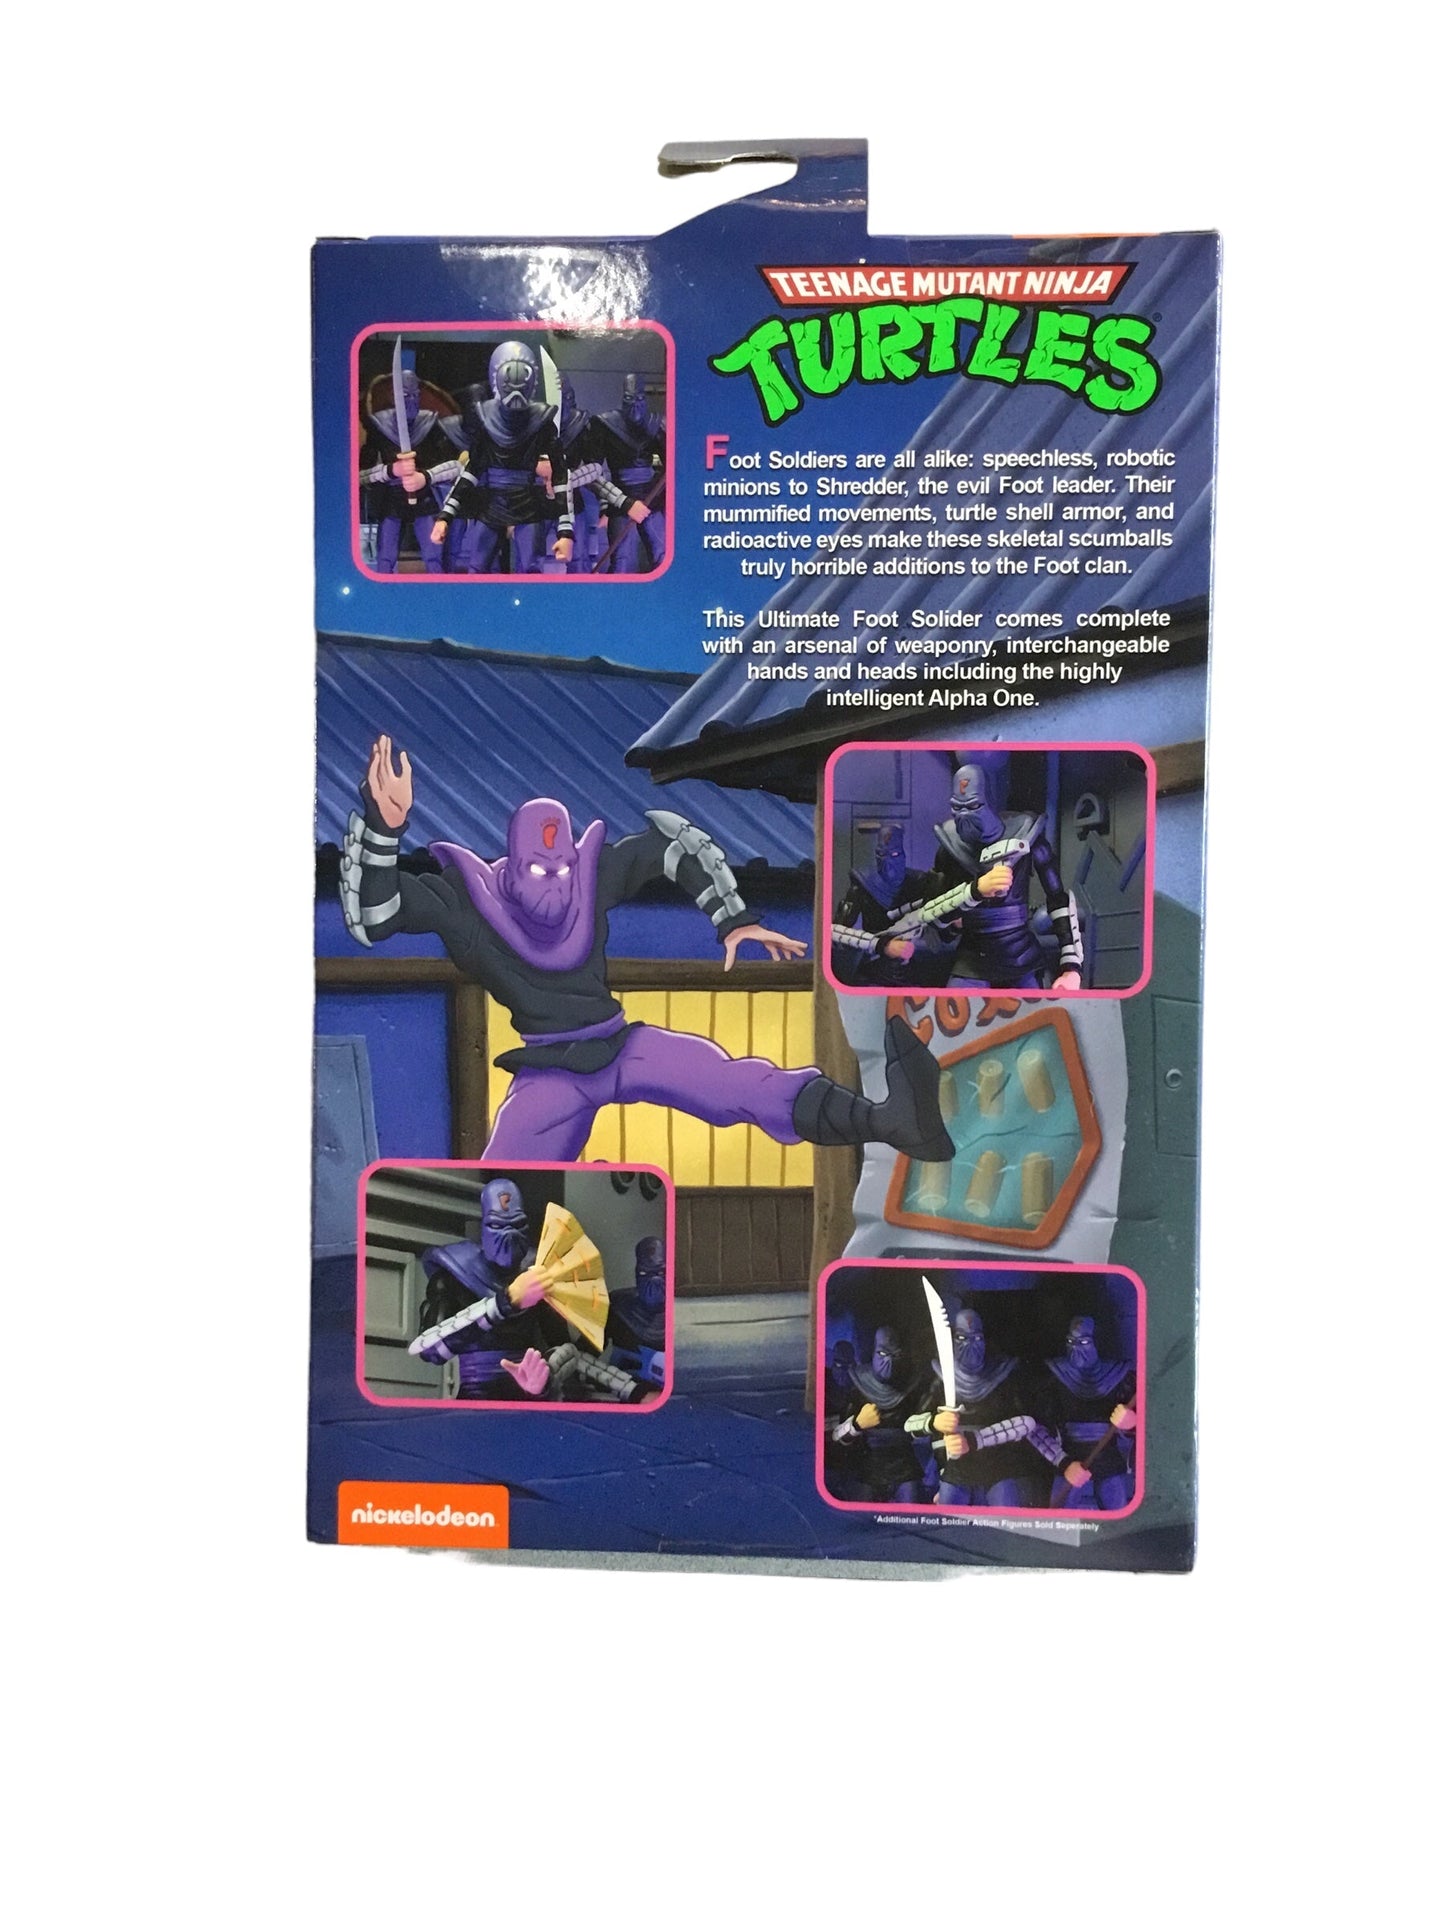 NECA - Teenage Mutant Ninja Turtles - Trouble's Afoot Action Figures